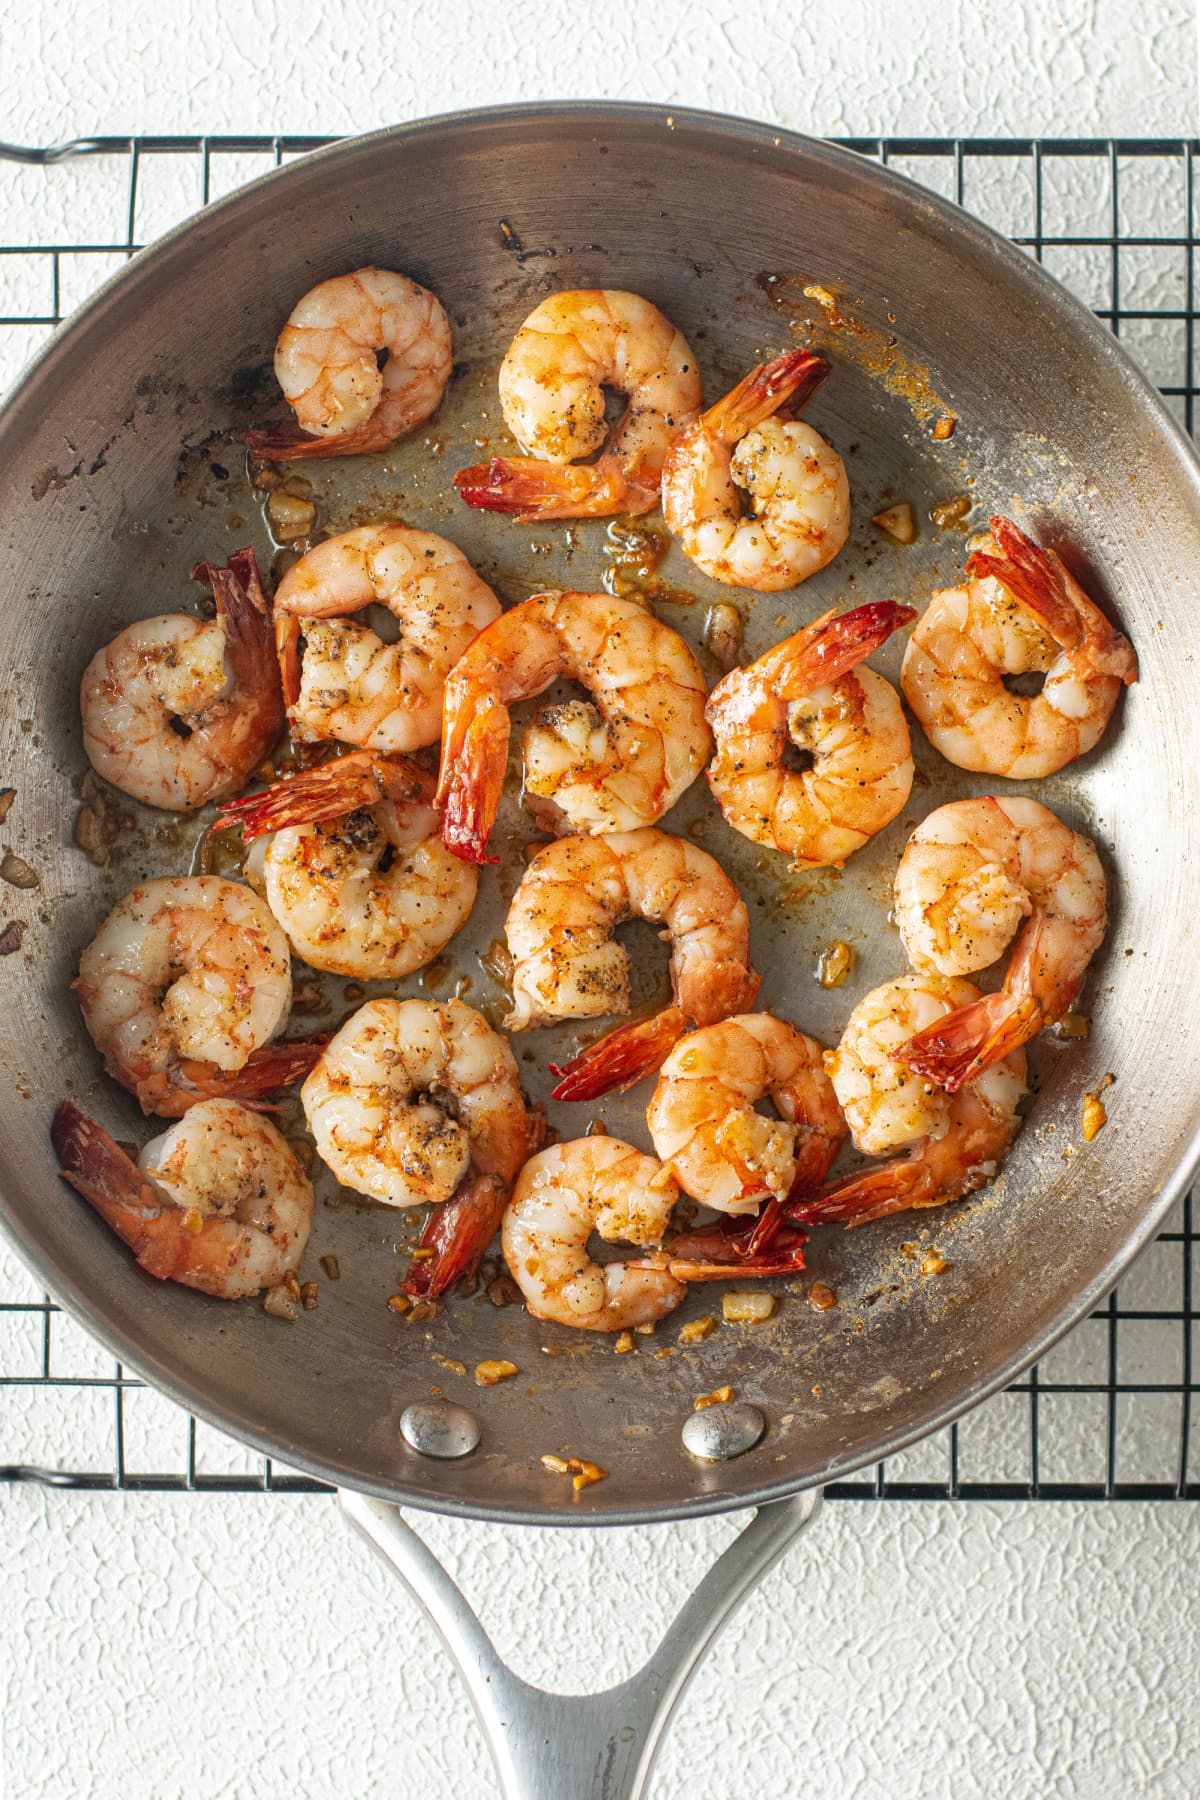 Shrimp in pan with garlic